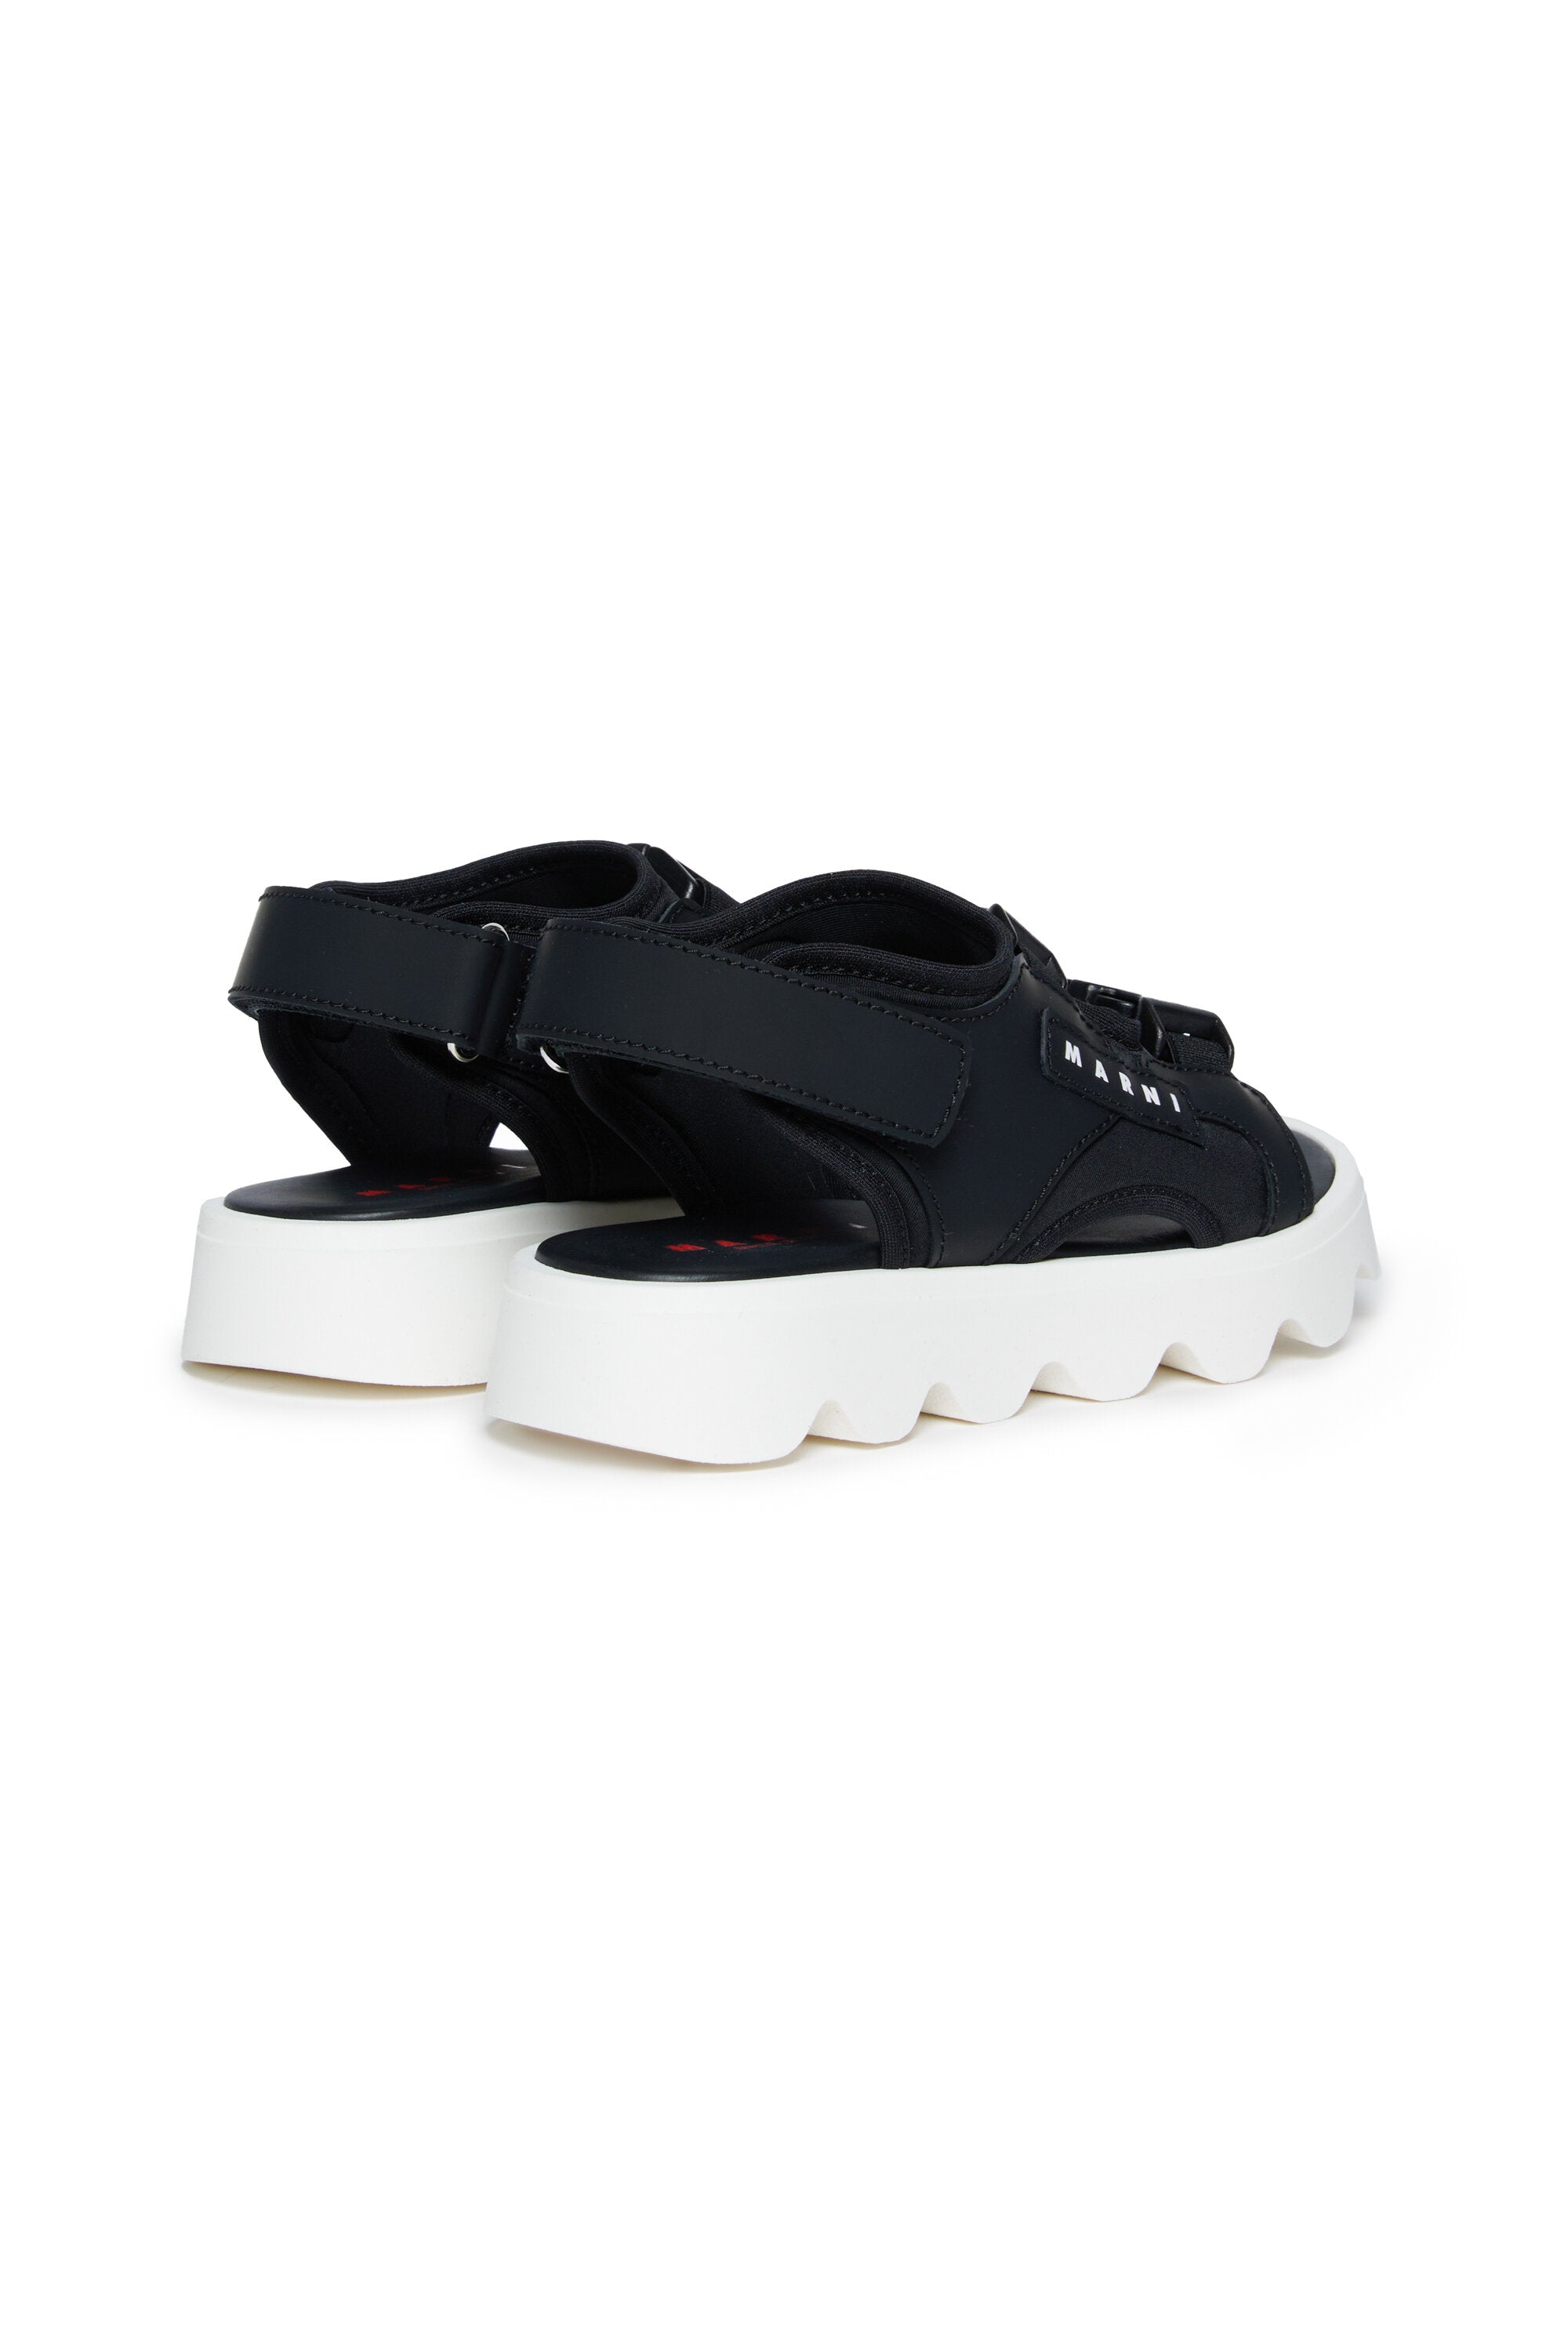 Sandals with platform soles